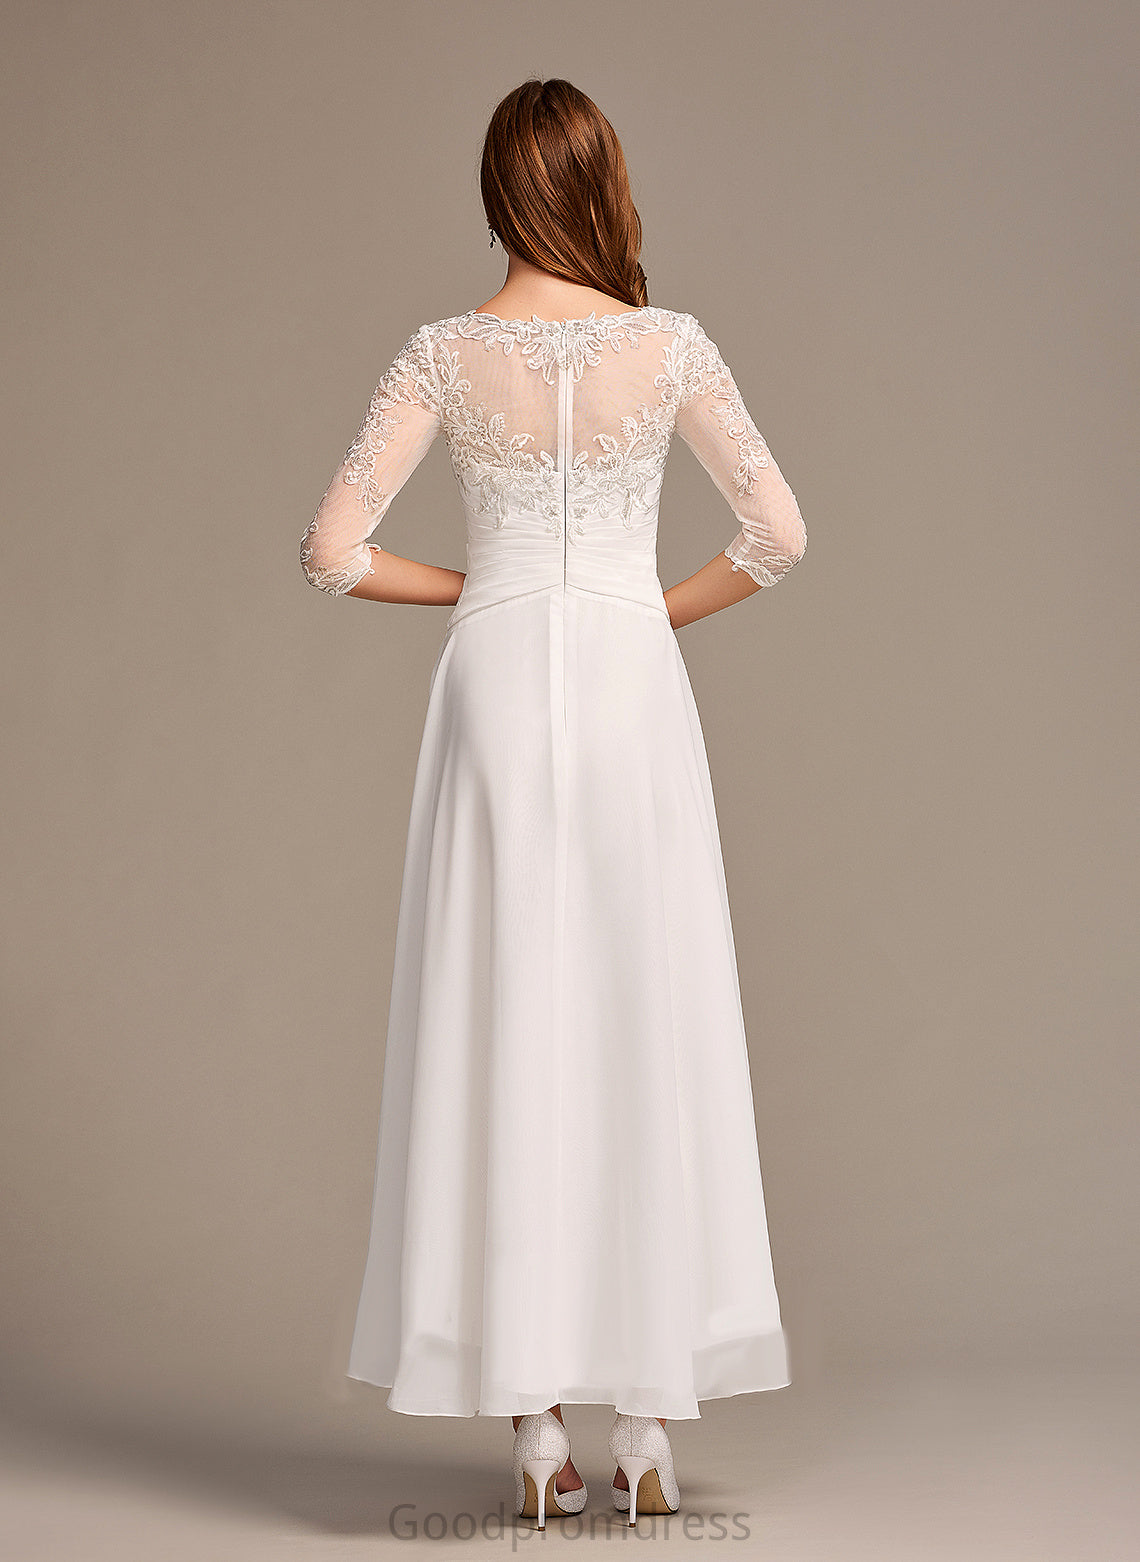 Lace Rylie Dress Wedding With Chiffon Asymmetrical Illusion Wedding Dresses A-Line